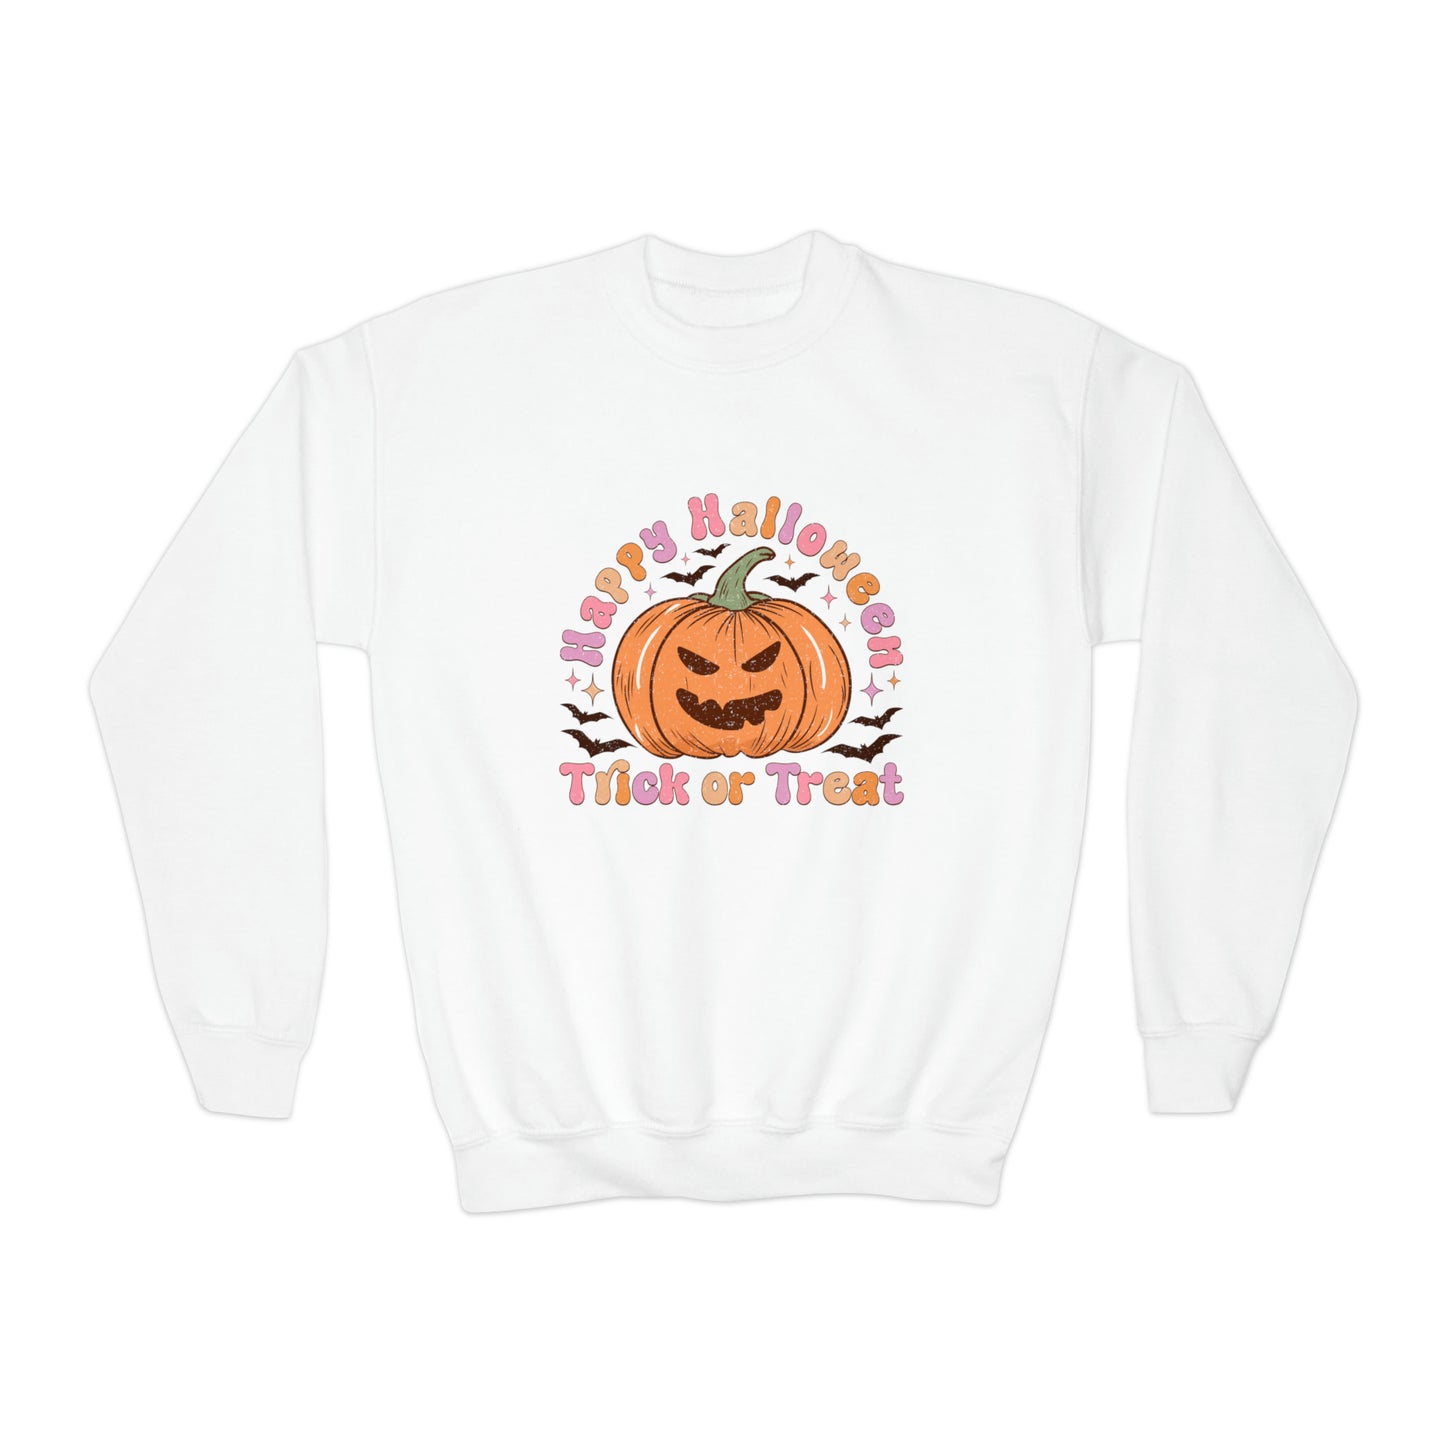 Happy Halloween Trick or Treat Youth Crewneck Sweatshirt